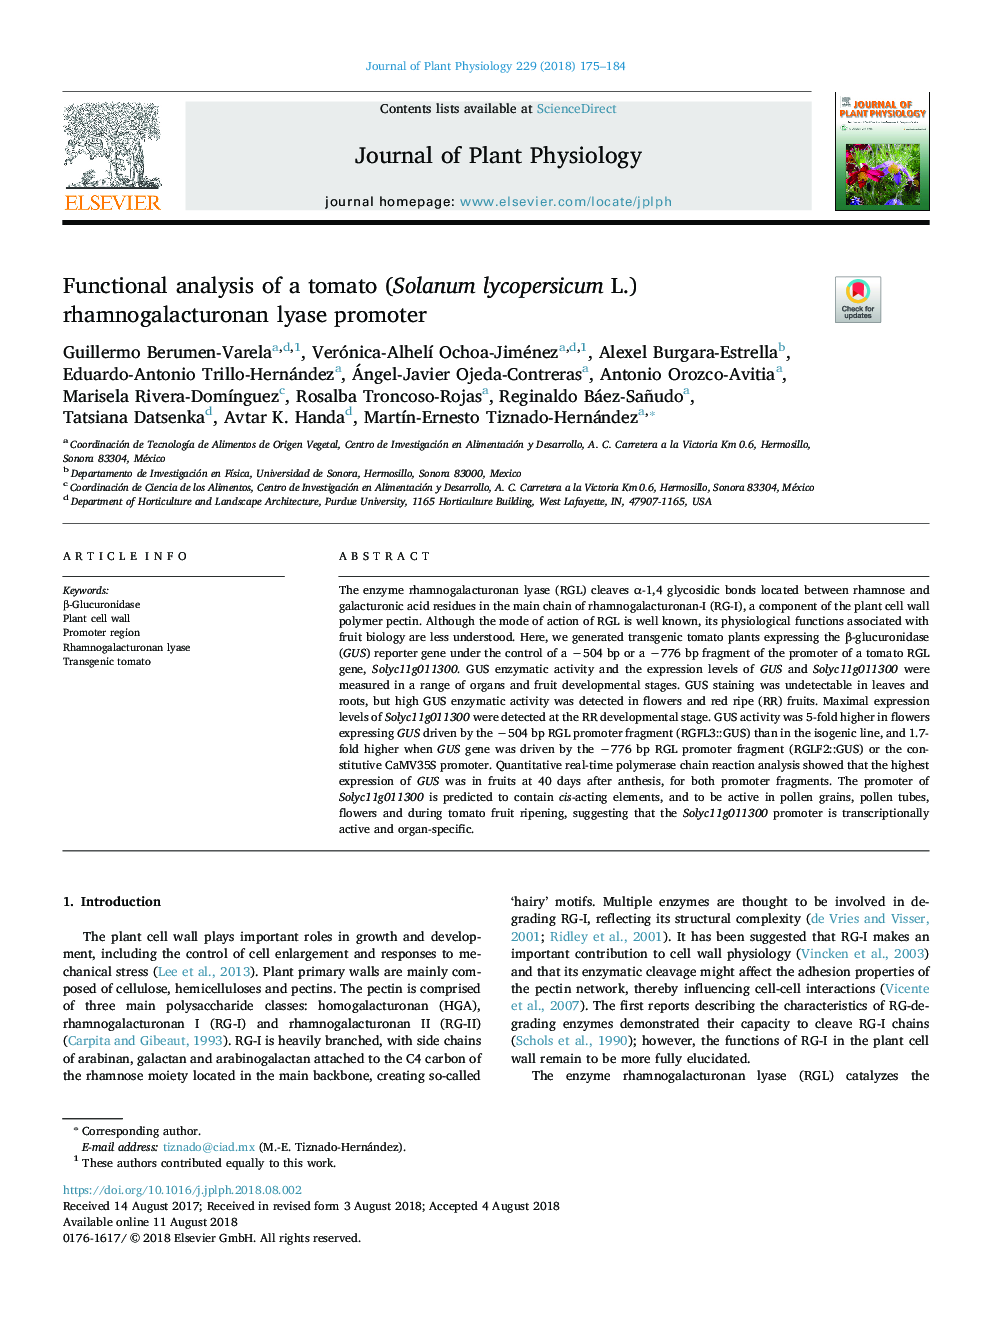 Functional analysis of a tomato (Solanum lycopersicum L.) rhamnogalacturonan lyase promoter